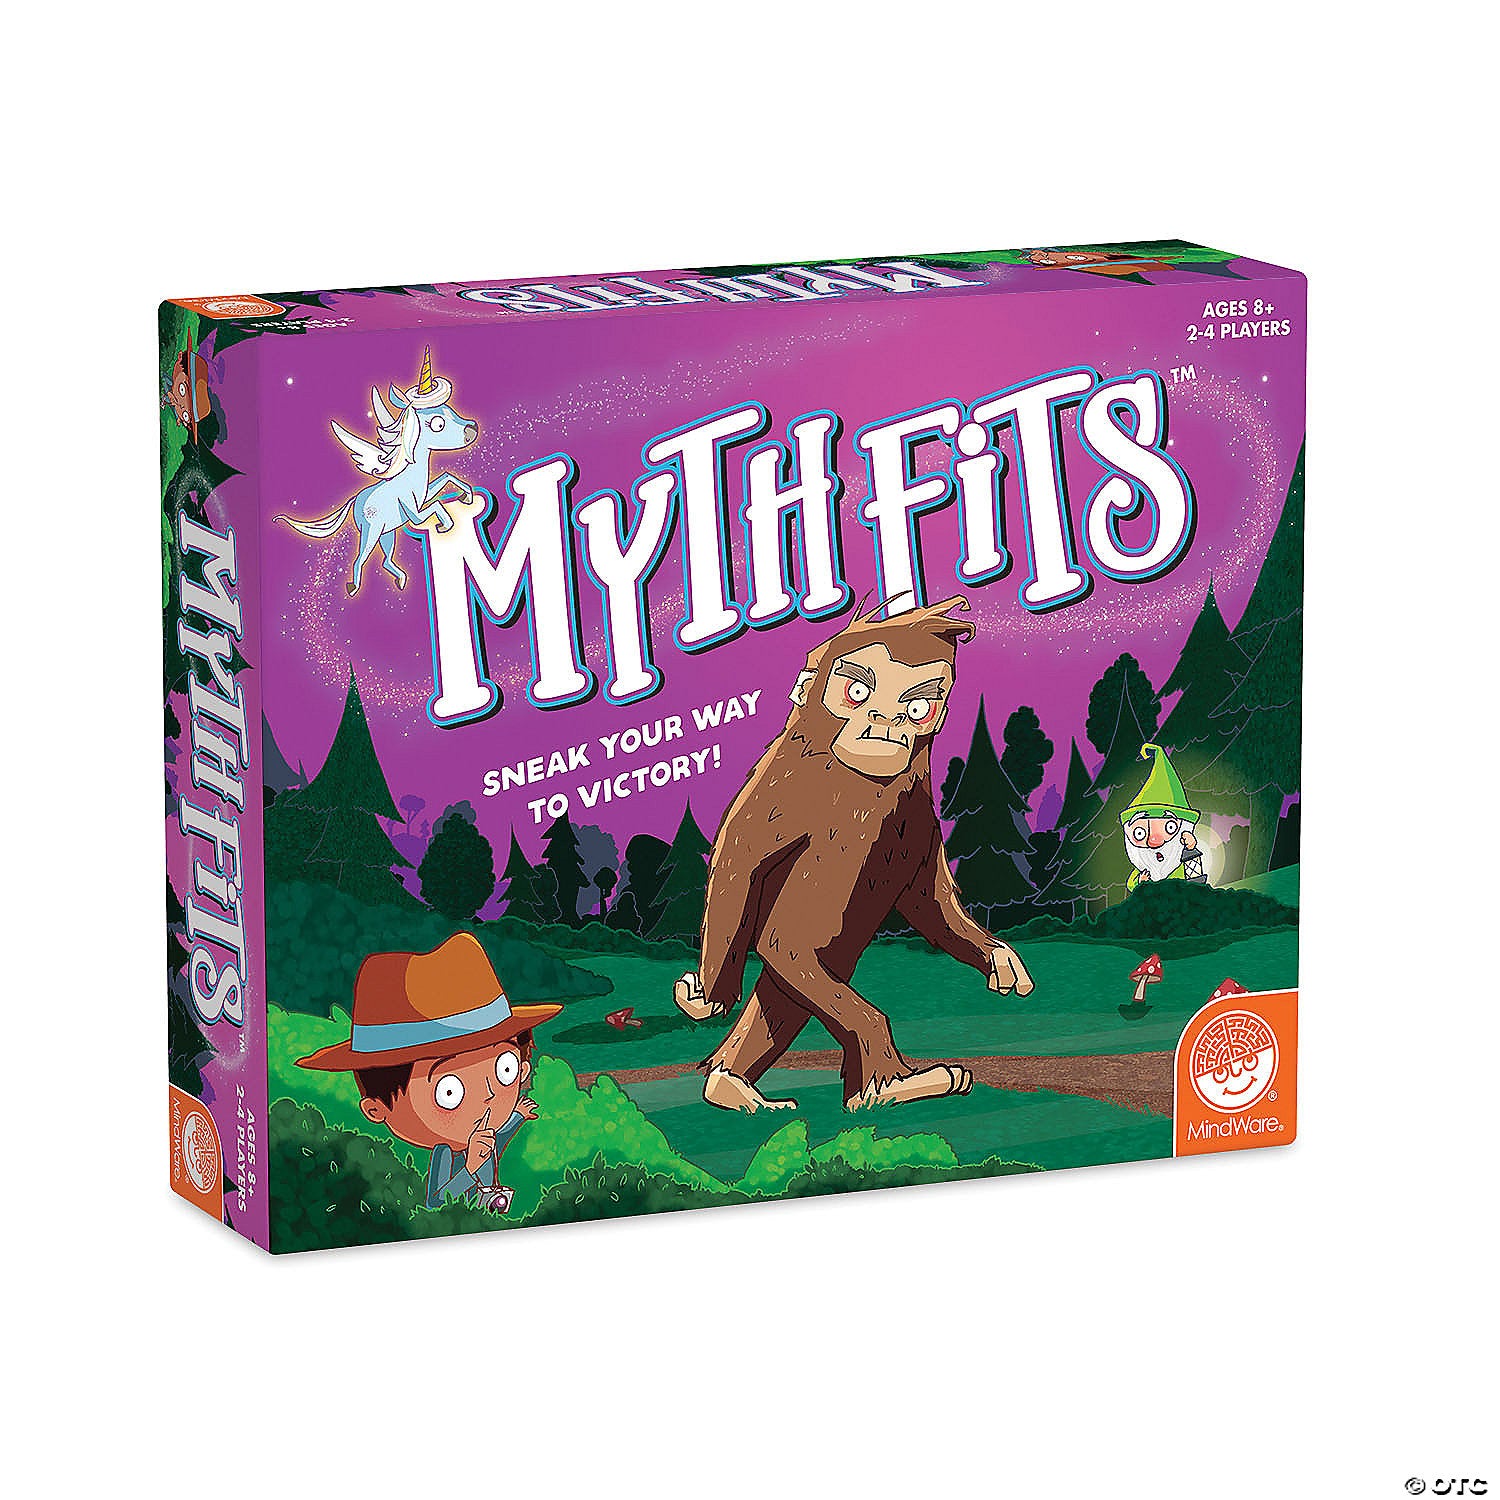 MythFits